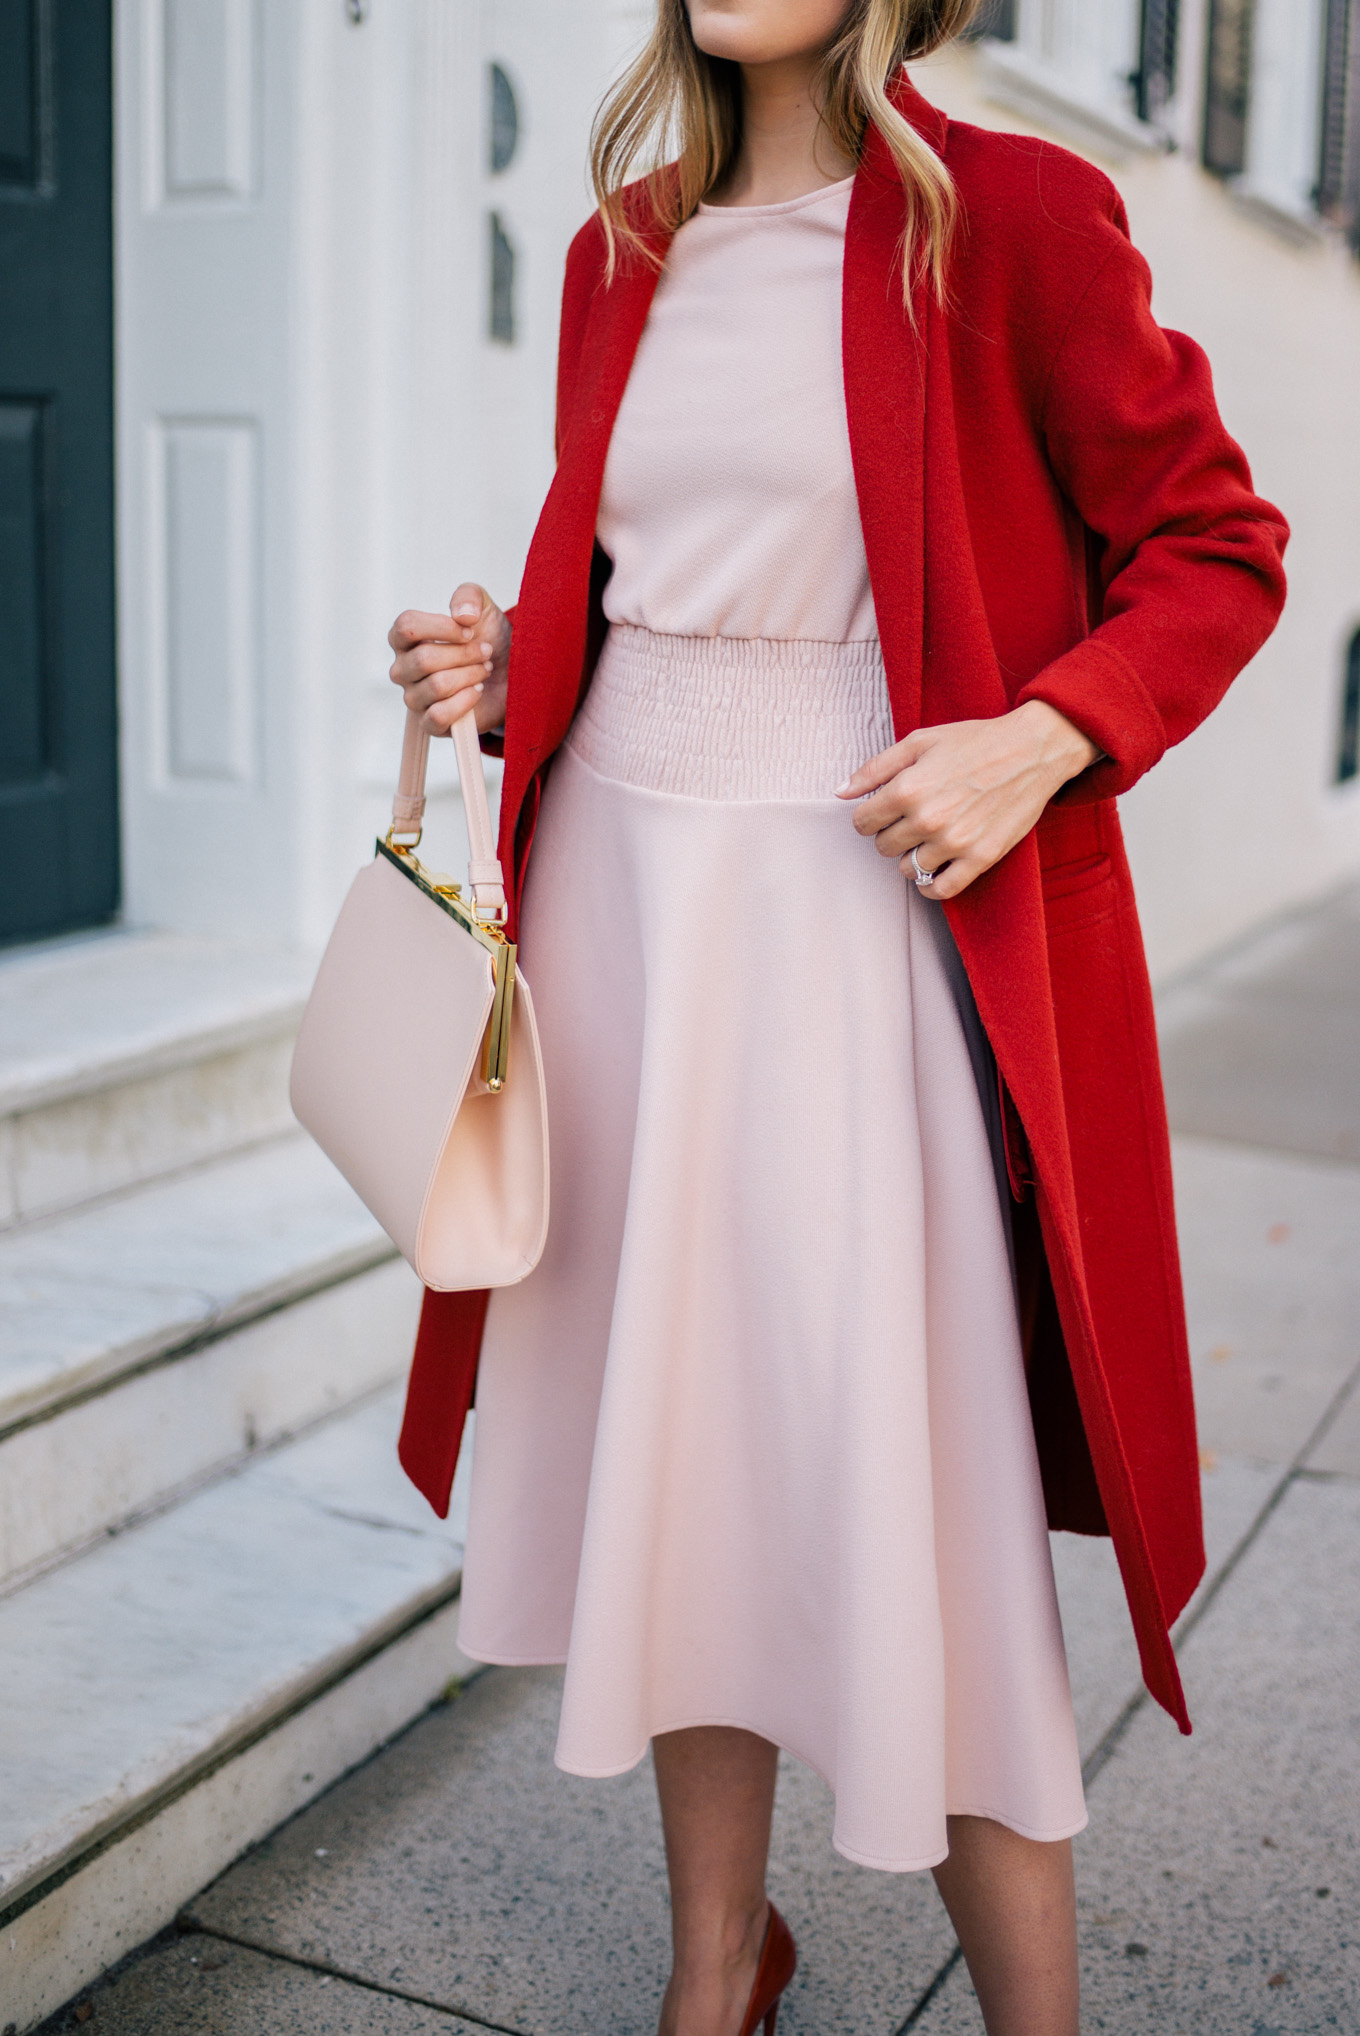 gmg-pink-dress-red-coat-1009577